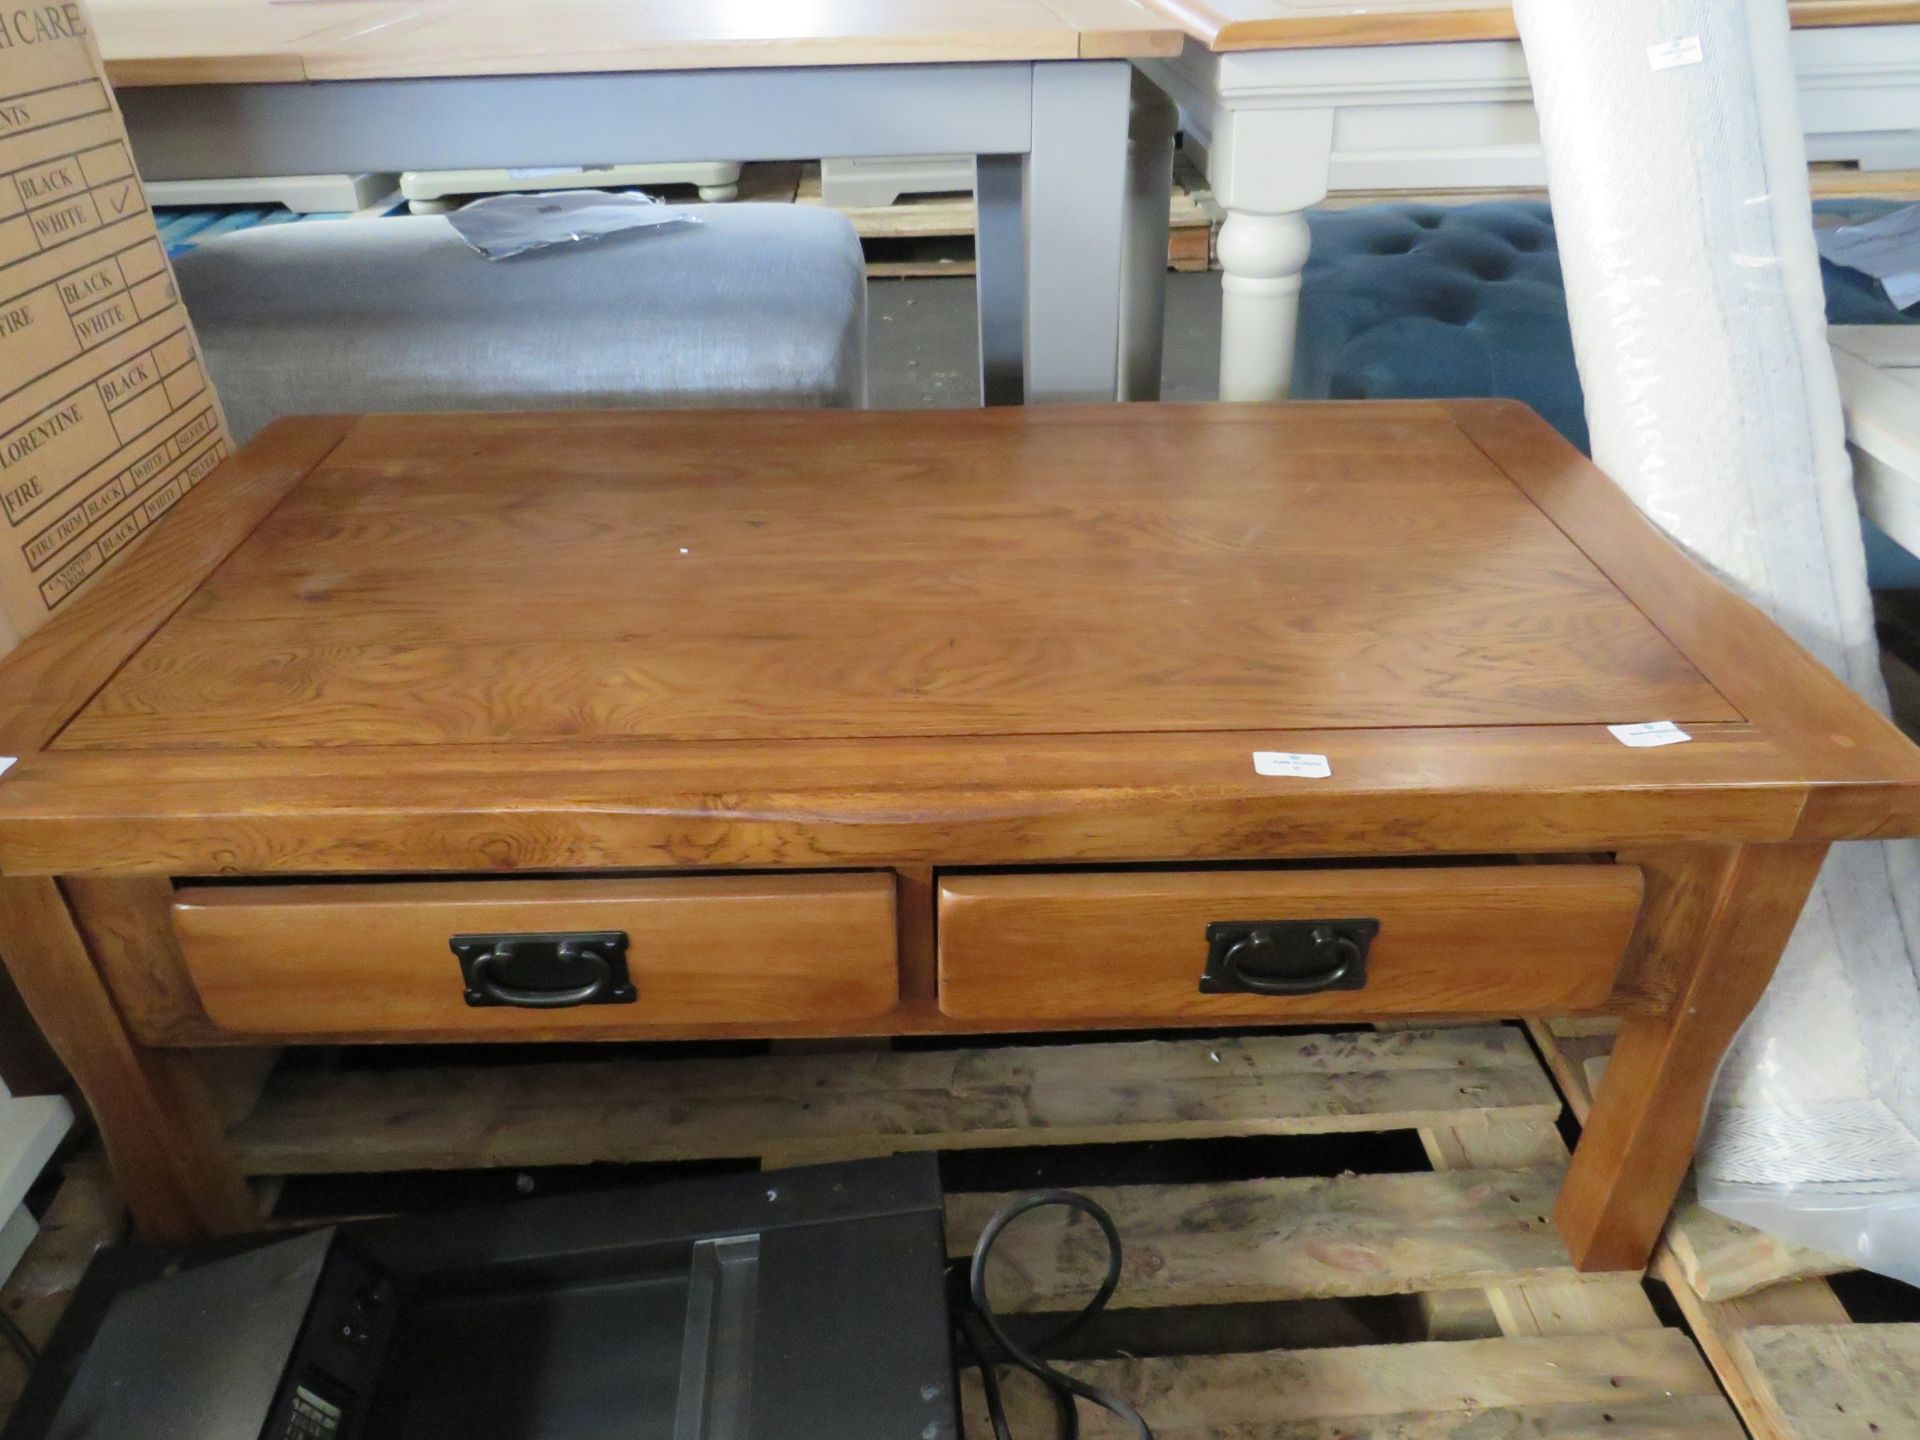 Oak Furnitureland Original Rustic Solid Oak 4 Drawer Storage Coffee Table RRP 249.99 This Rustic